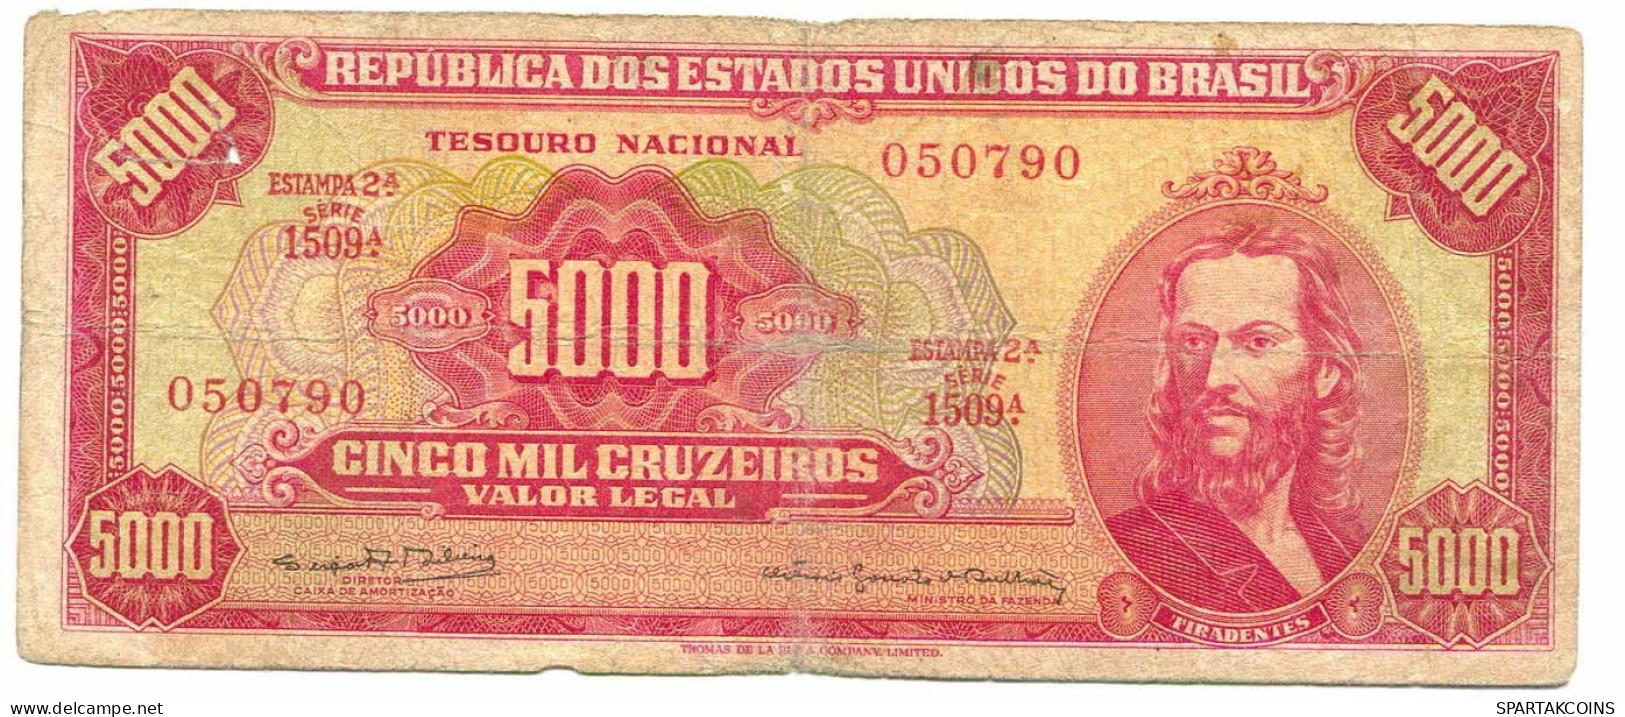 BRASIL 5000 CRUZEIROS 1964 SERIE 1509A Paper Money Banknote #P10876.4 - [11] Emisiones Locales